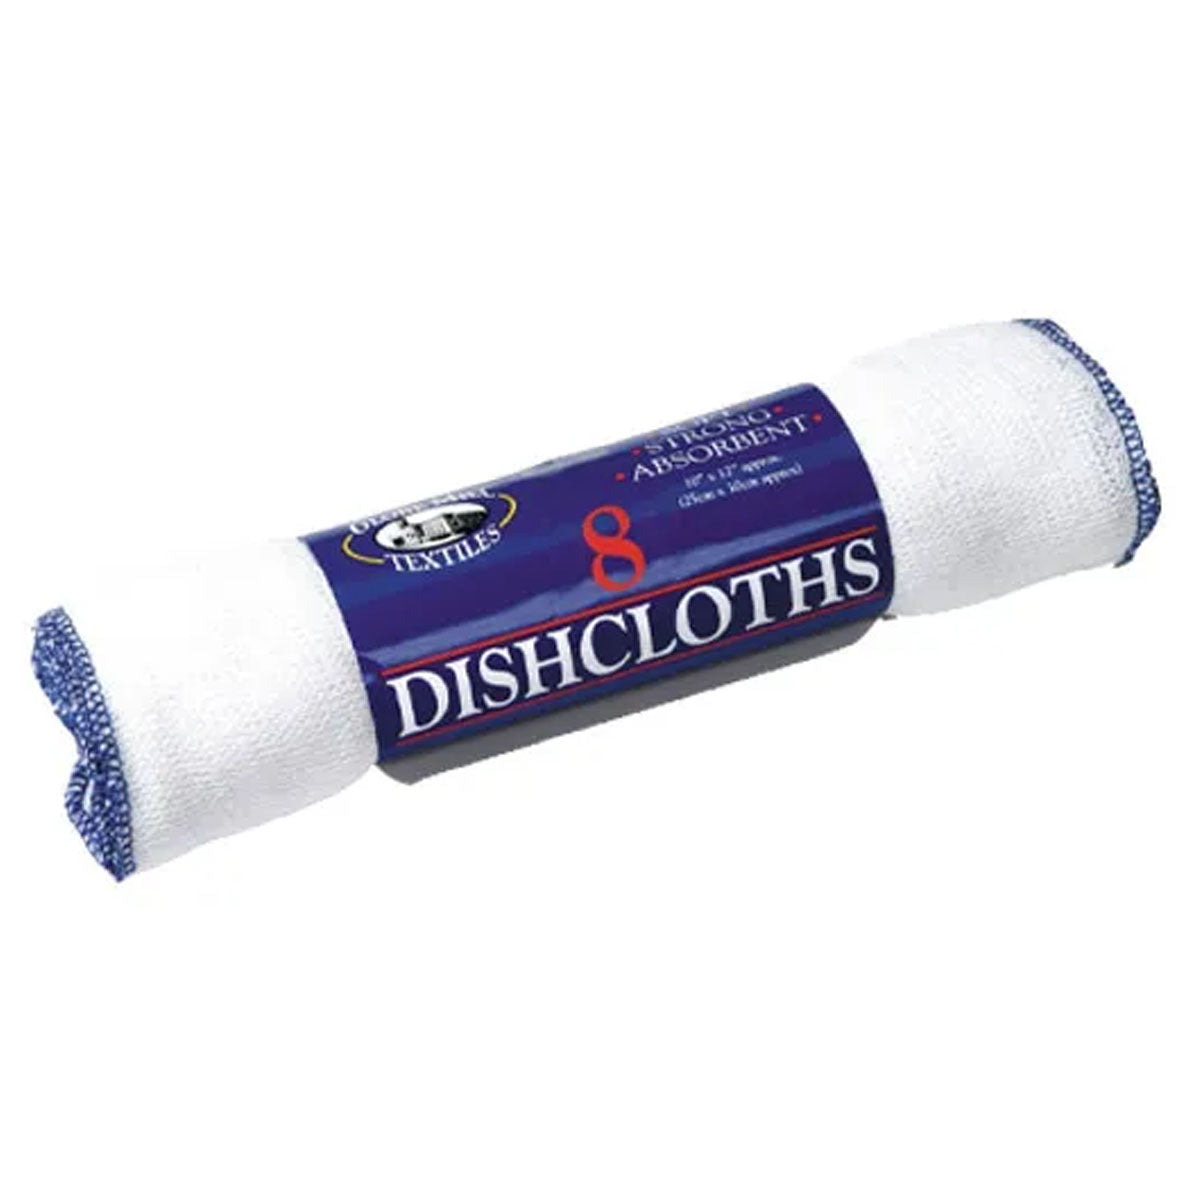 Dishcloths - 8pcs - Continental Food Store